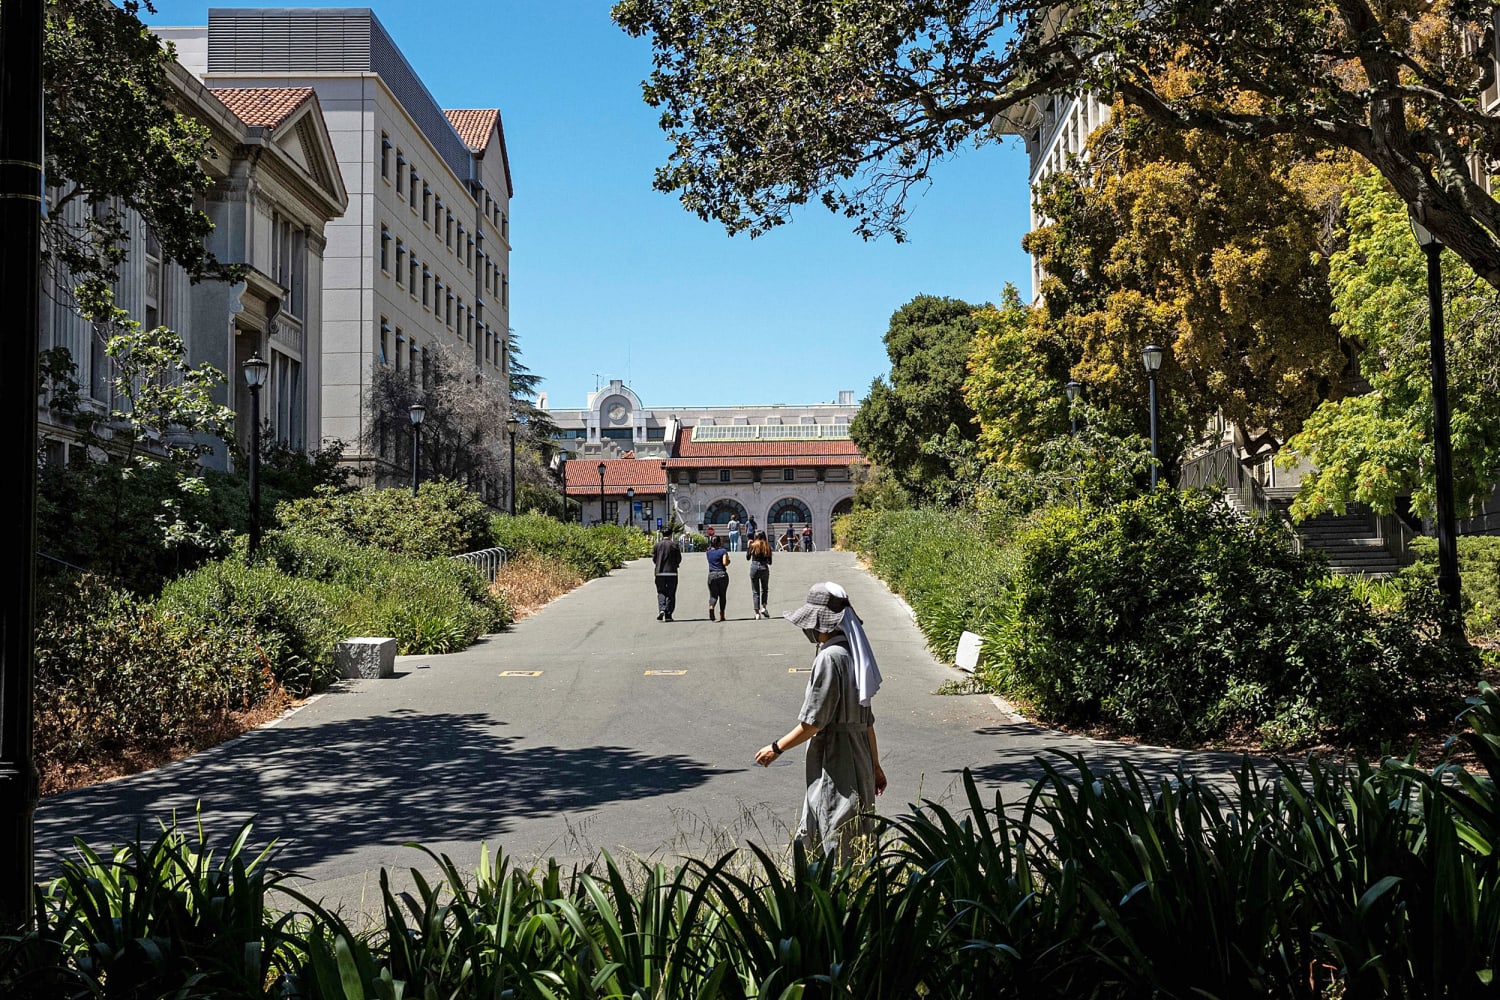 Human skeleton found in building on UC Berkeley campus